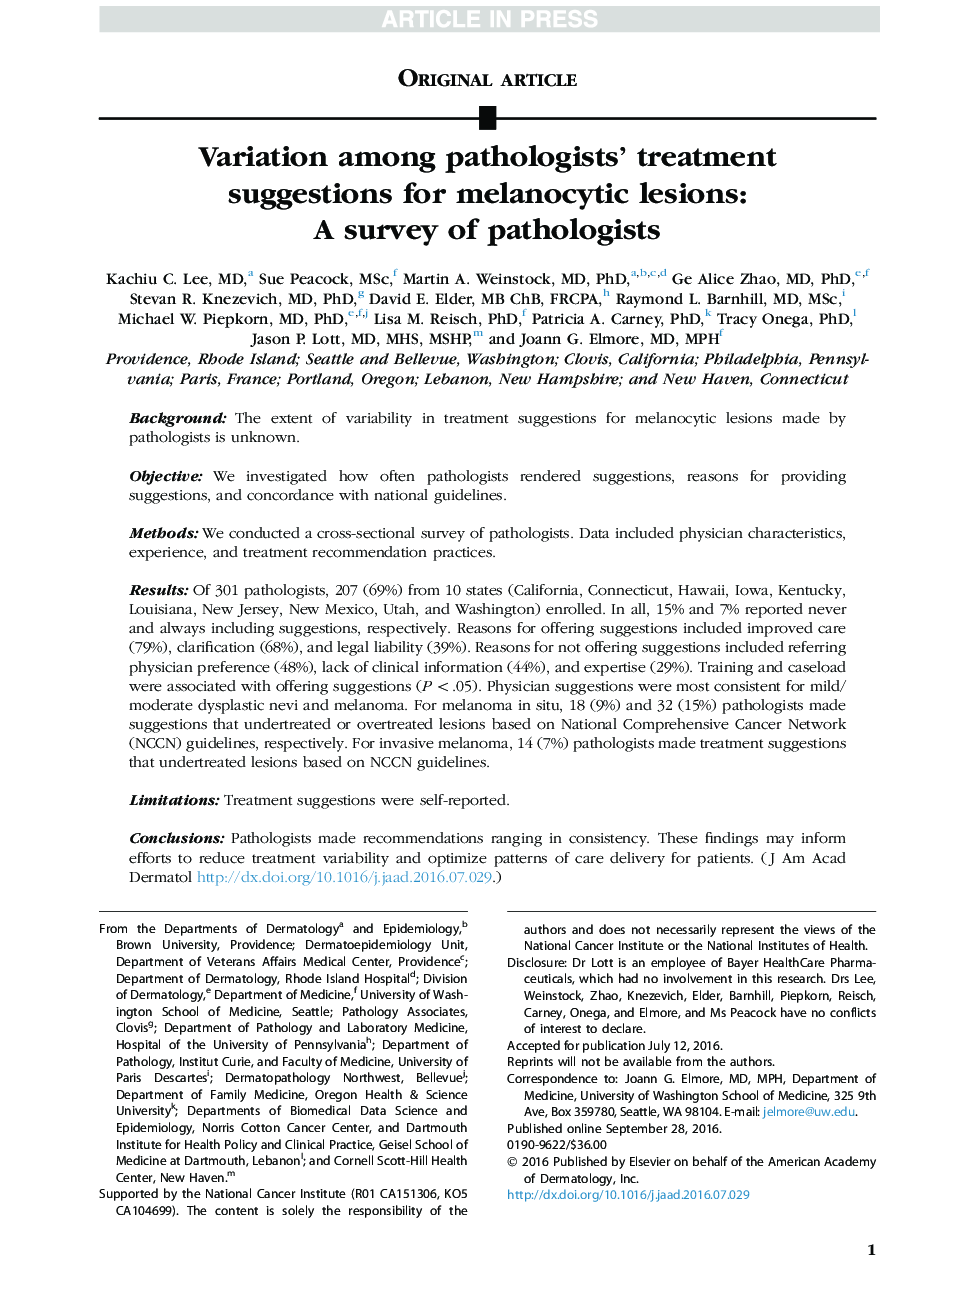 Variation among pathologists' treatment suggestions for melanocytic lesions: A survey of pathologists